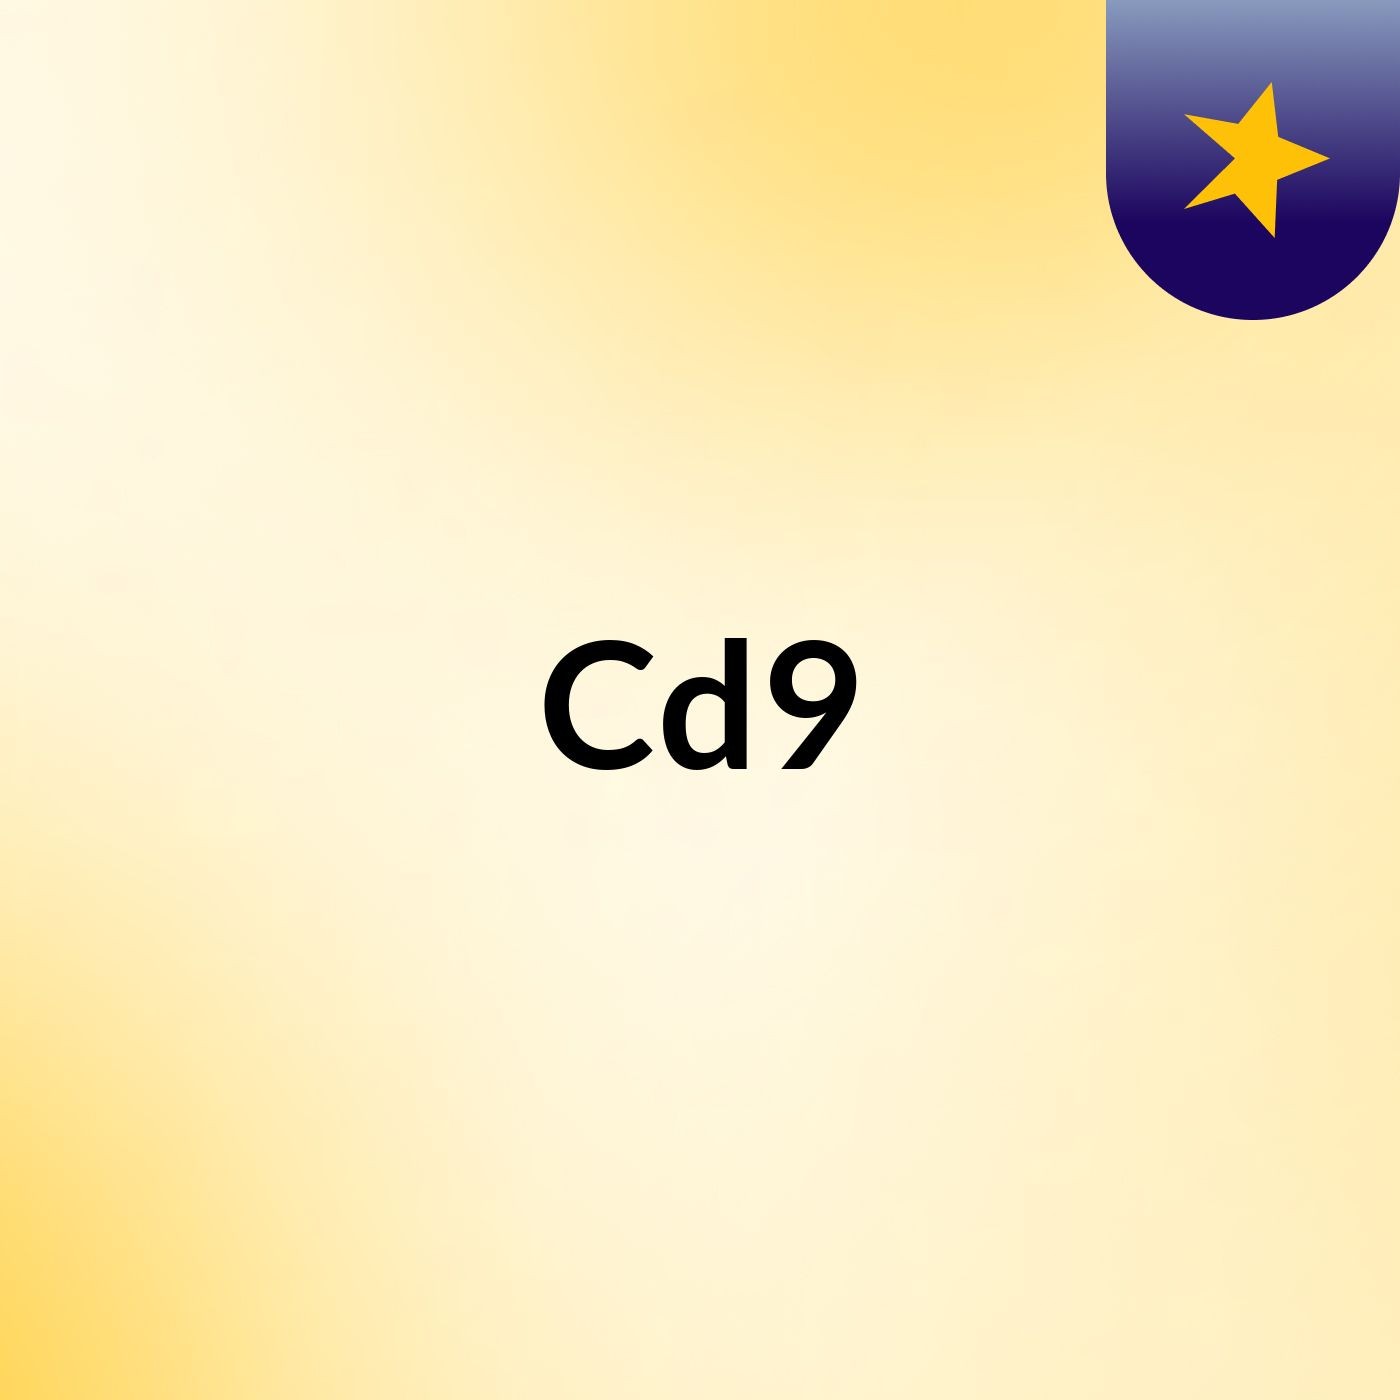 Cd9